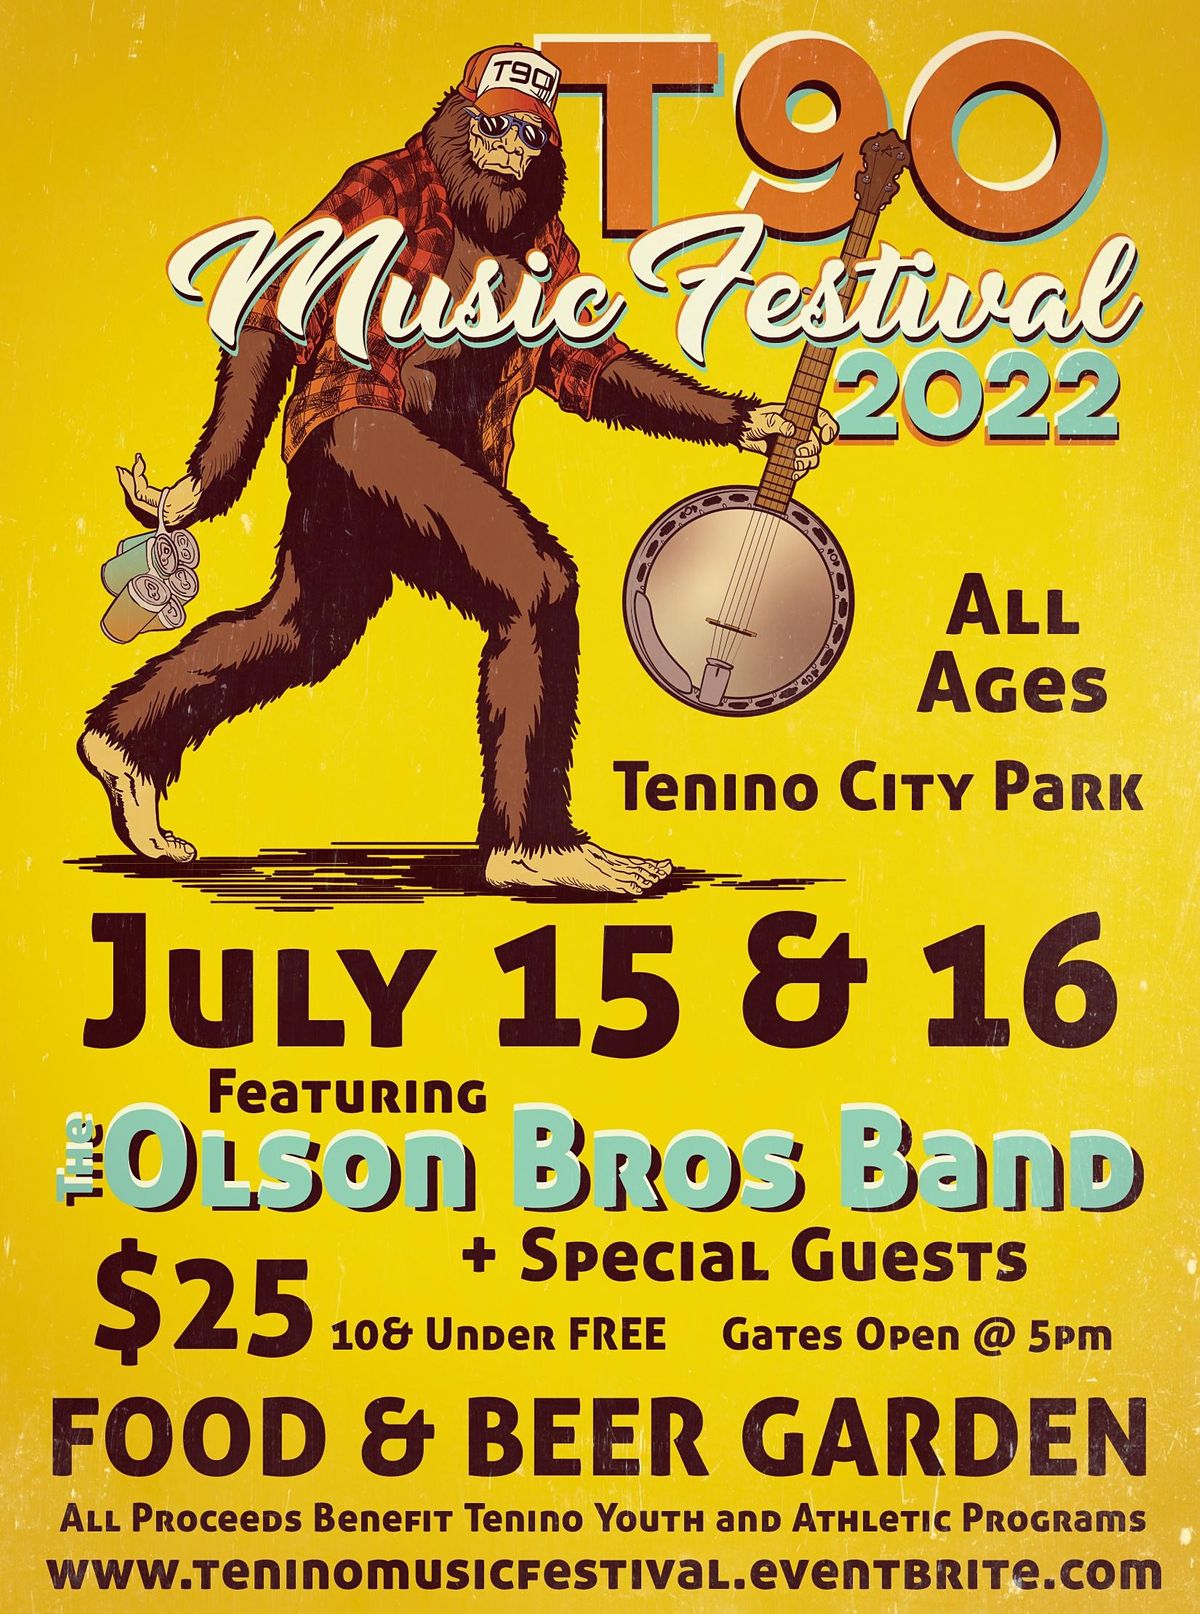 Tenino Music Festival 2022 Tenino City Park July 15 to July 16